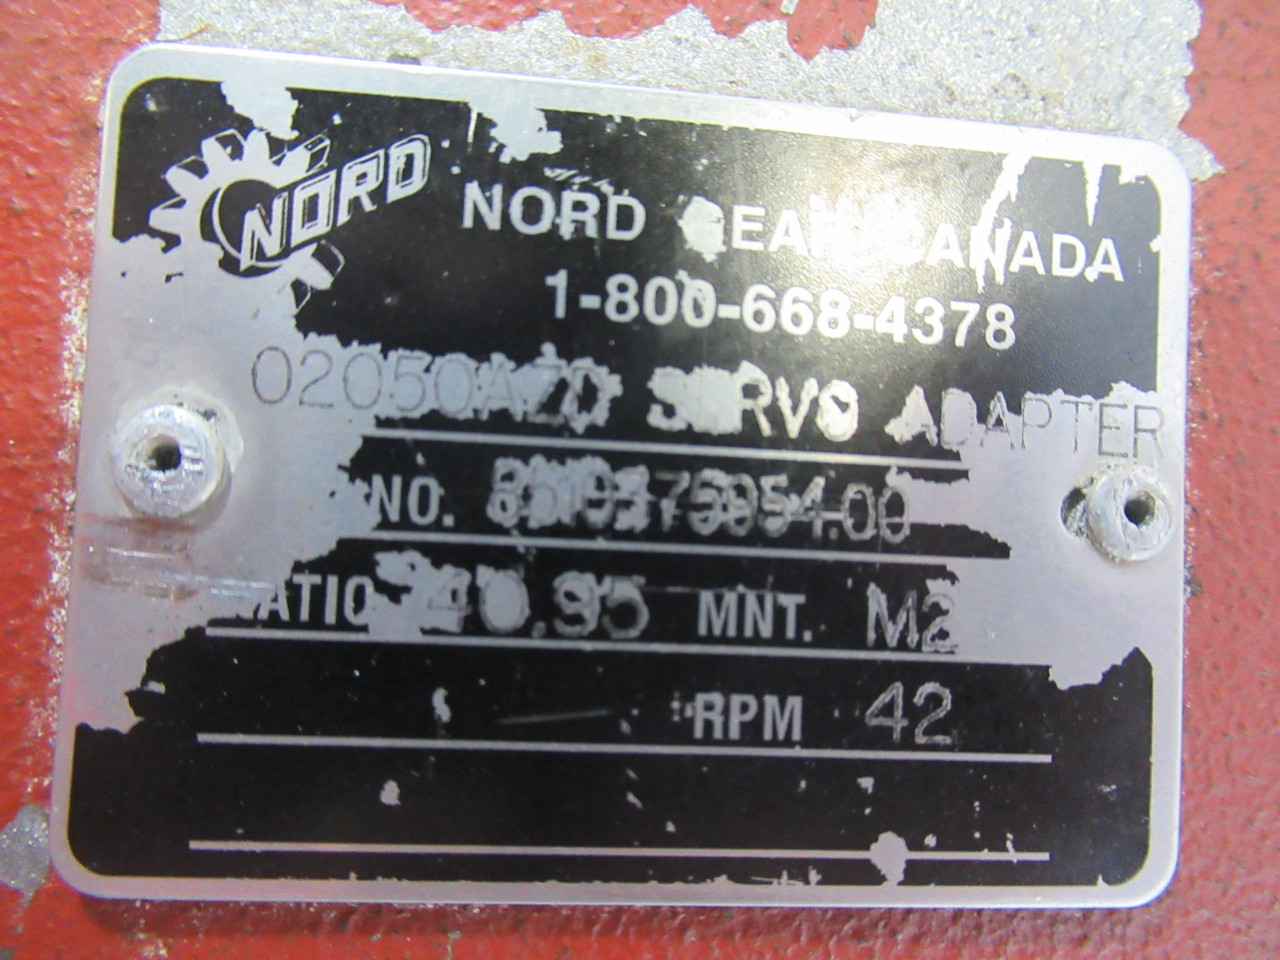 Nord Gear 02050AZD Servo Adapter 40.95:1 Ratio USED